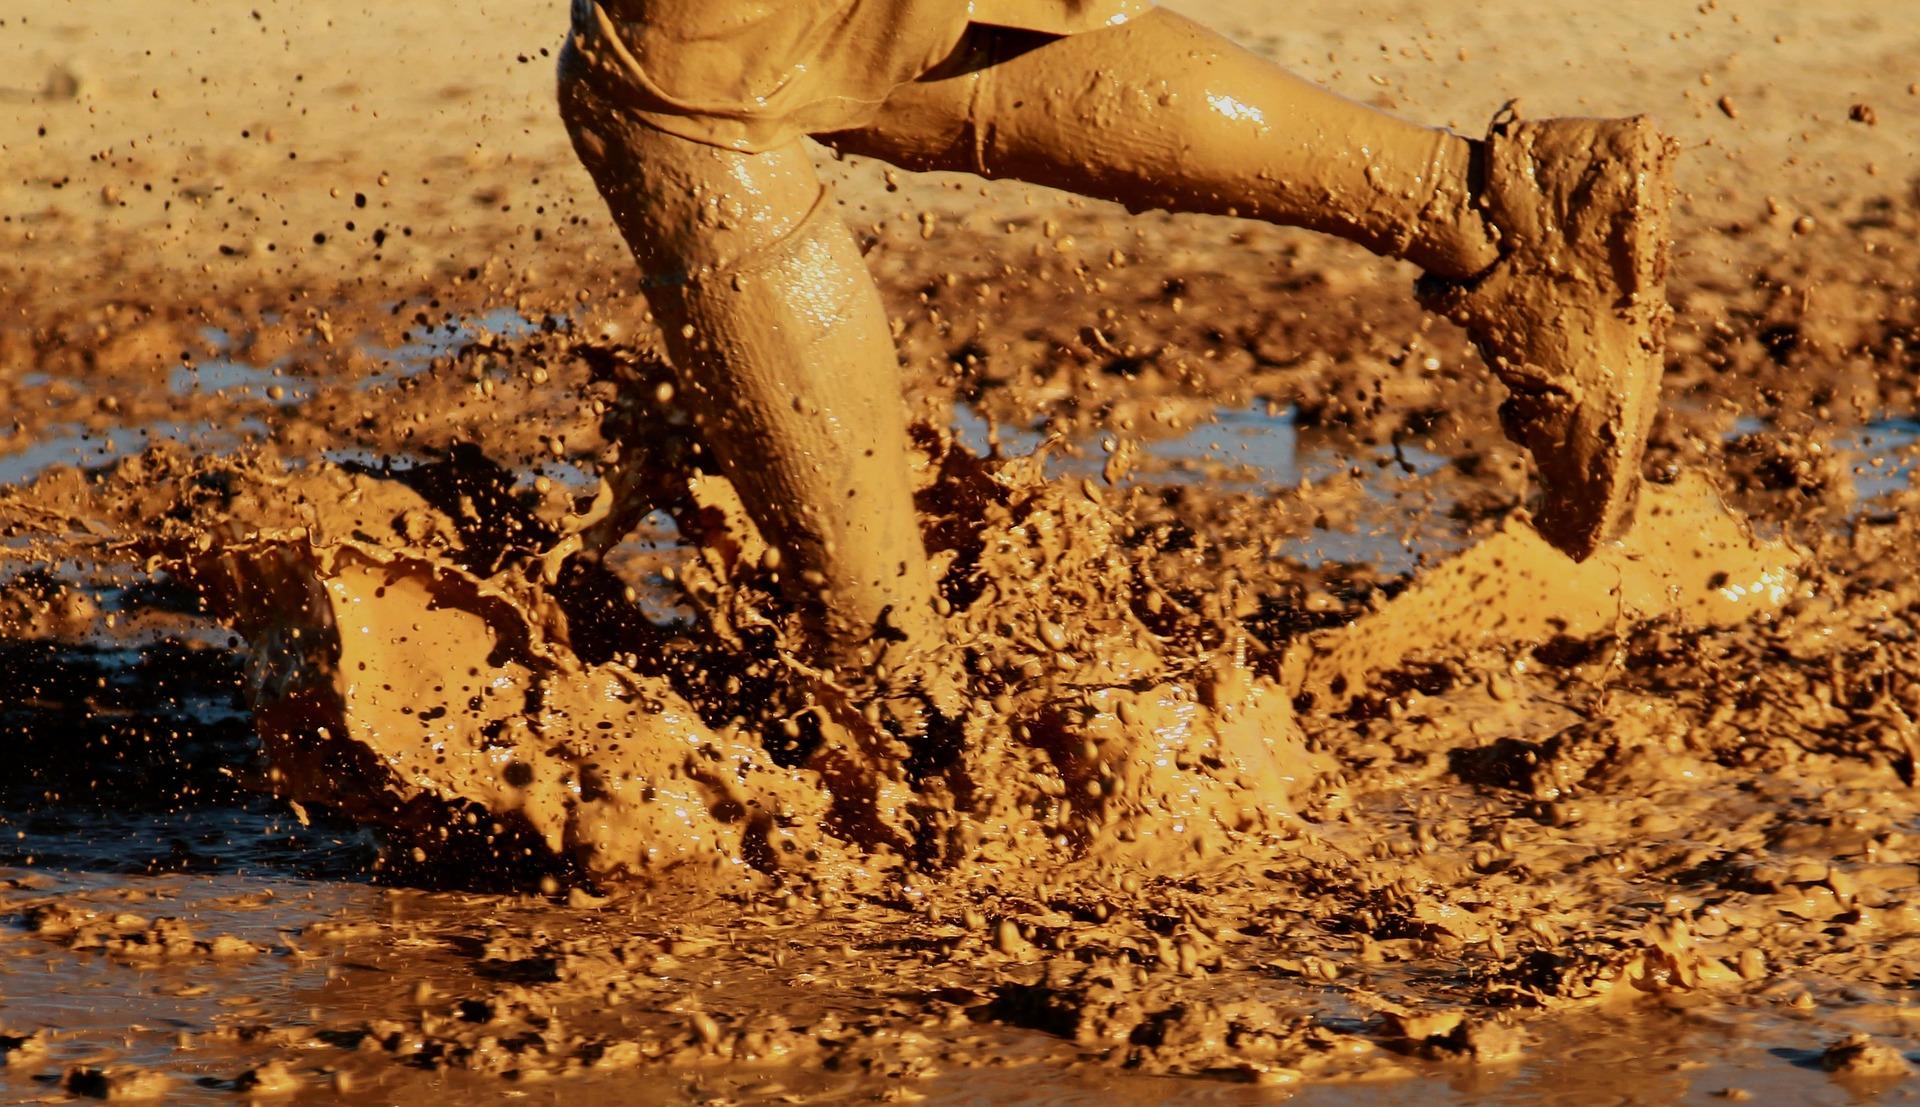 Feet running through the mud